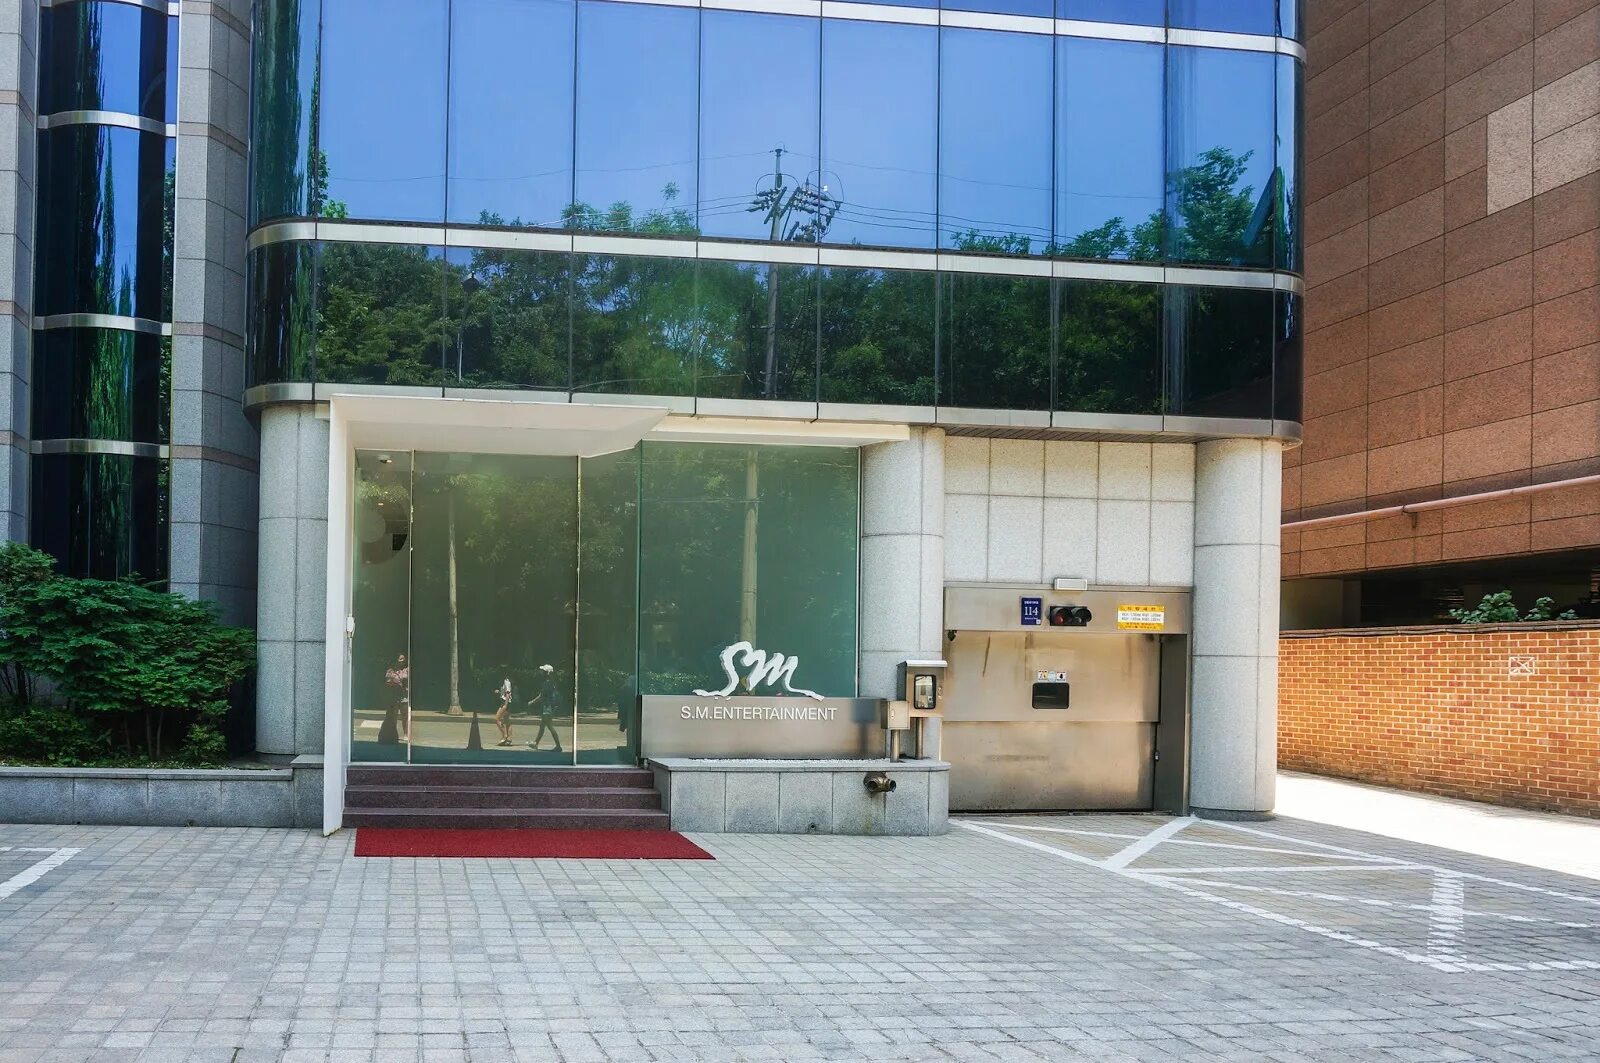 Sm building. Агентство SM Entertainment. Здание см Интертеймент в Корее. SM Entertainment здание. SM Entertainment здание 2021.